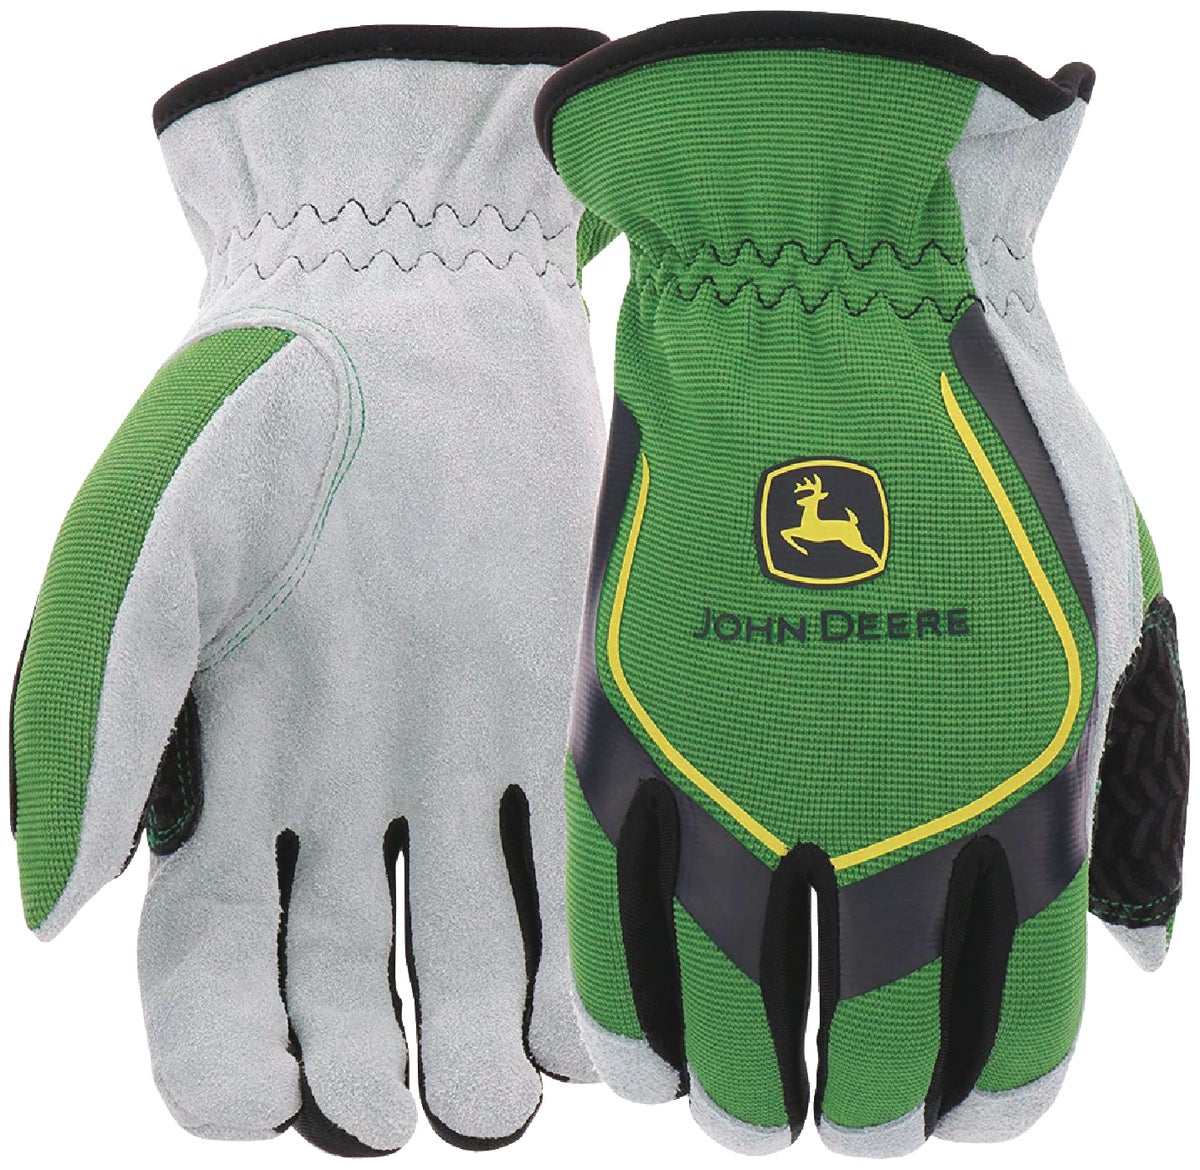 John Deere Leather Work Gloves L, Green & Gray